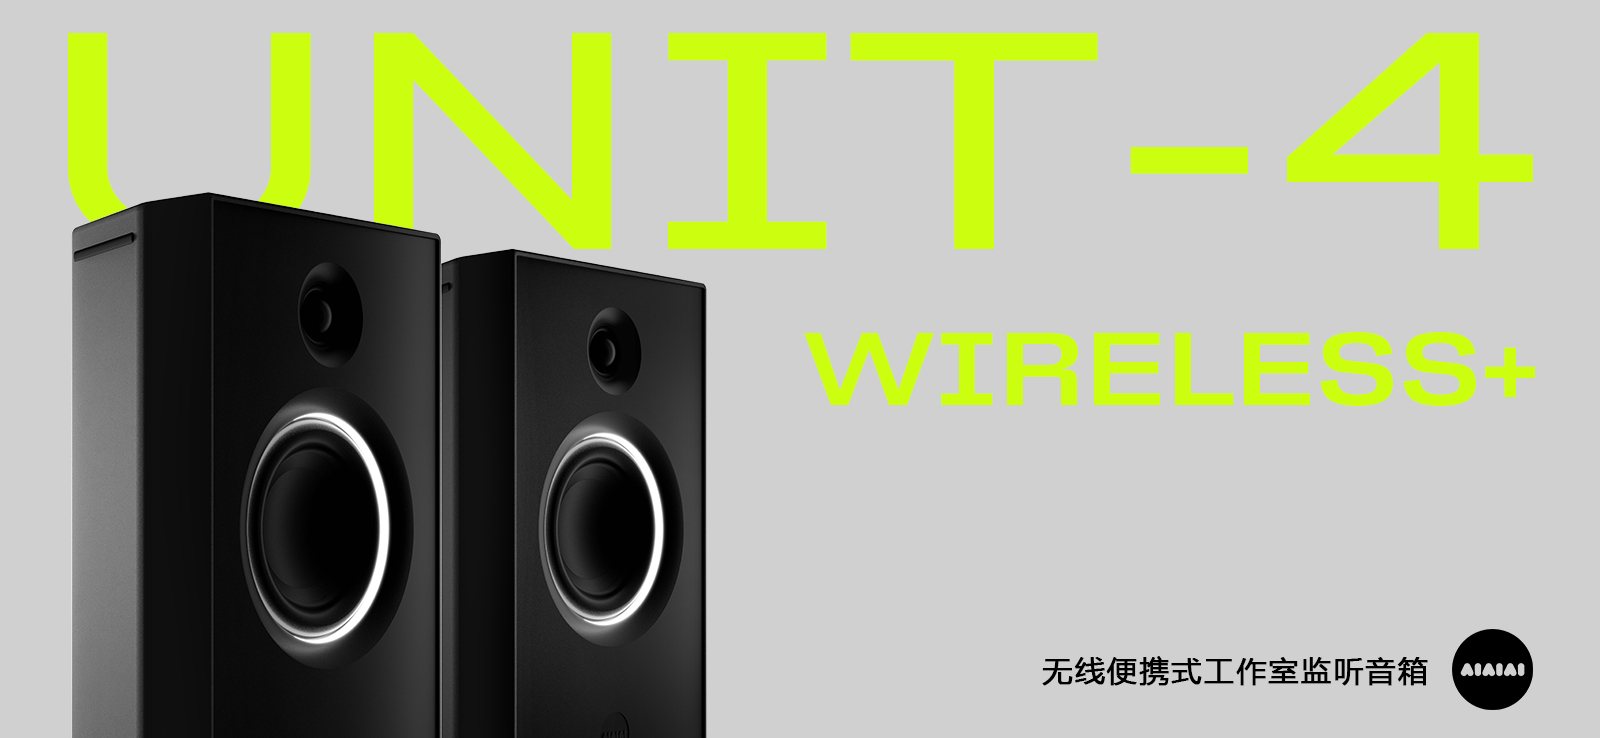 Unit-4 Wireless+